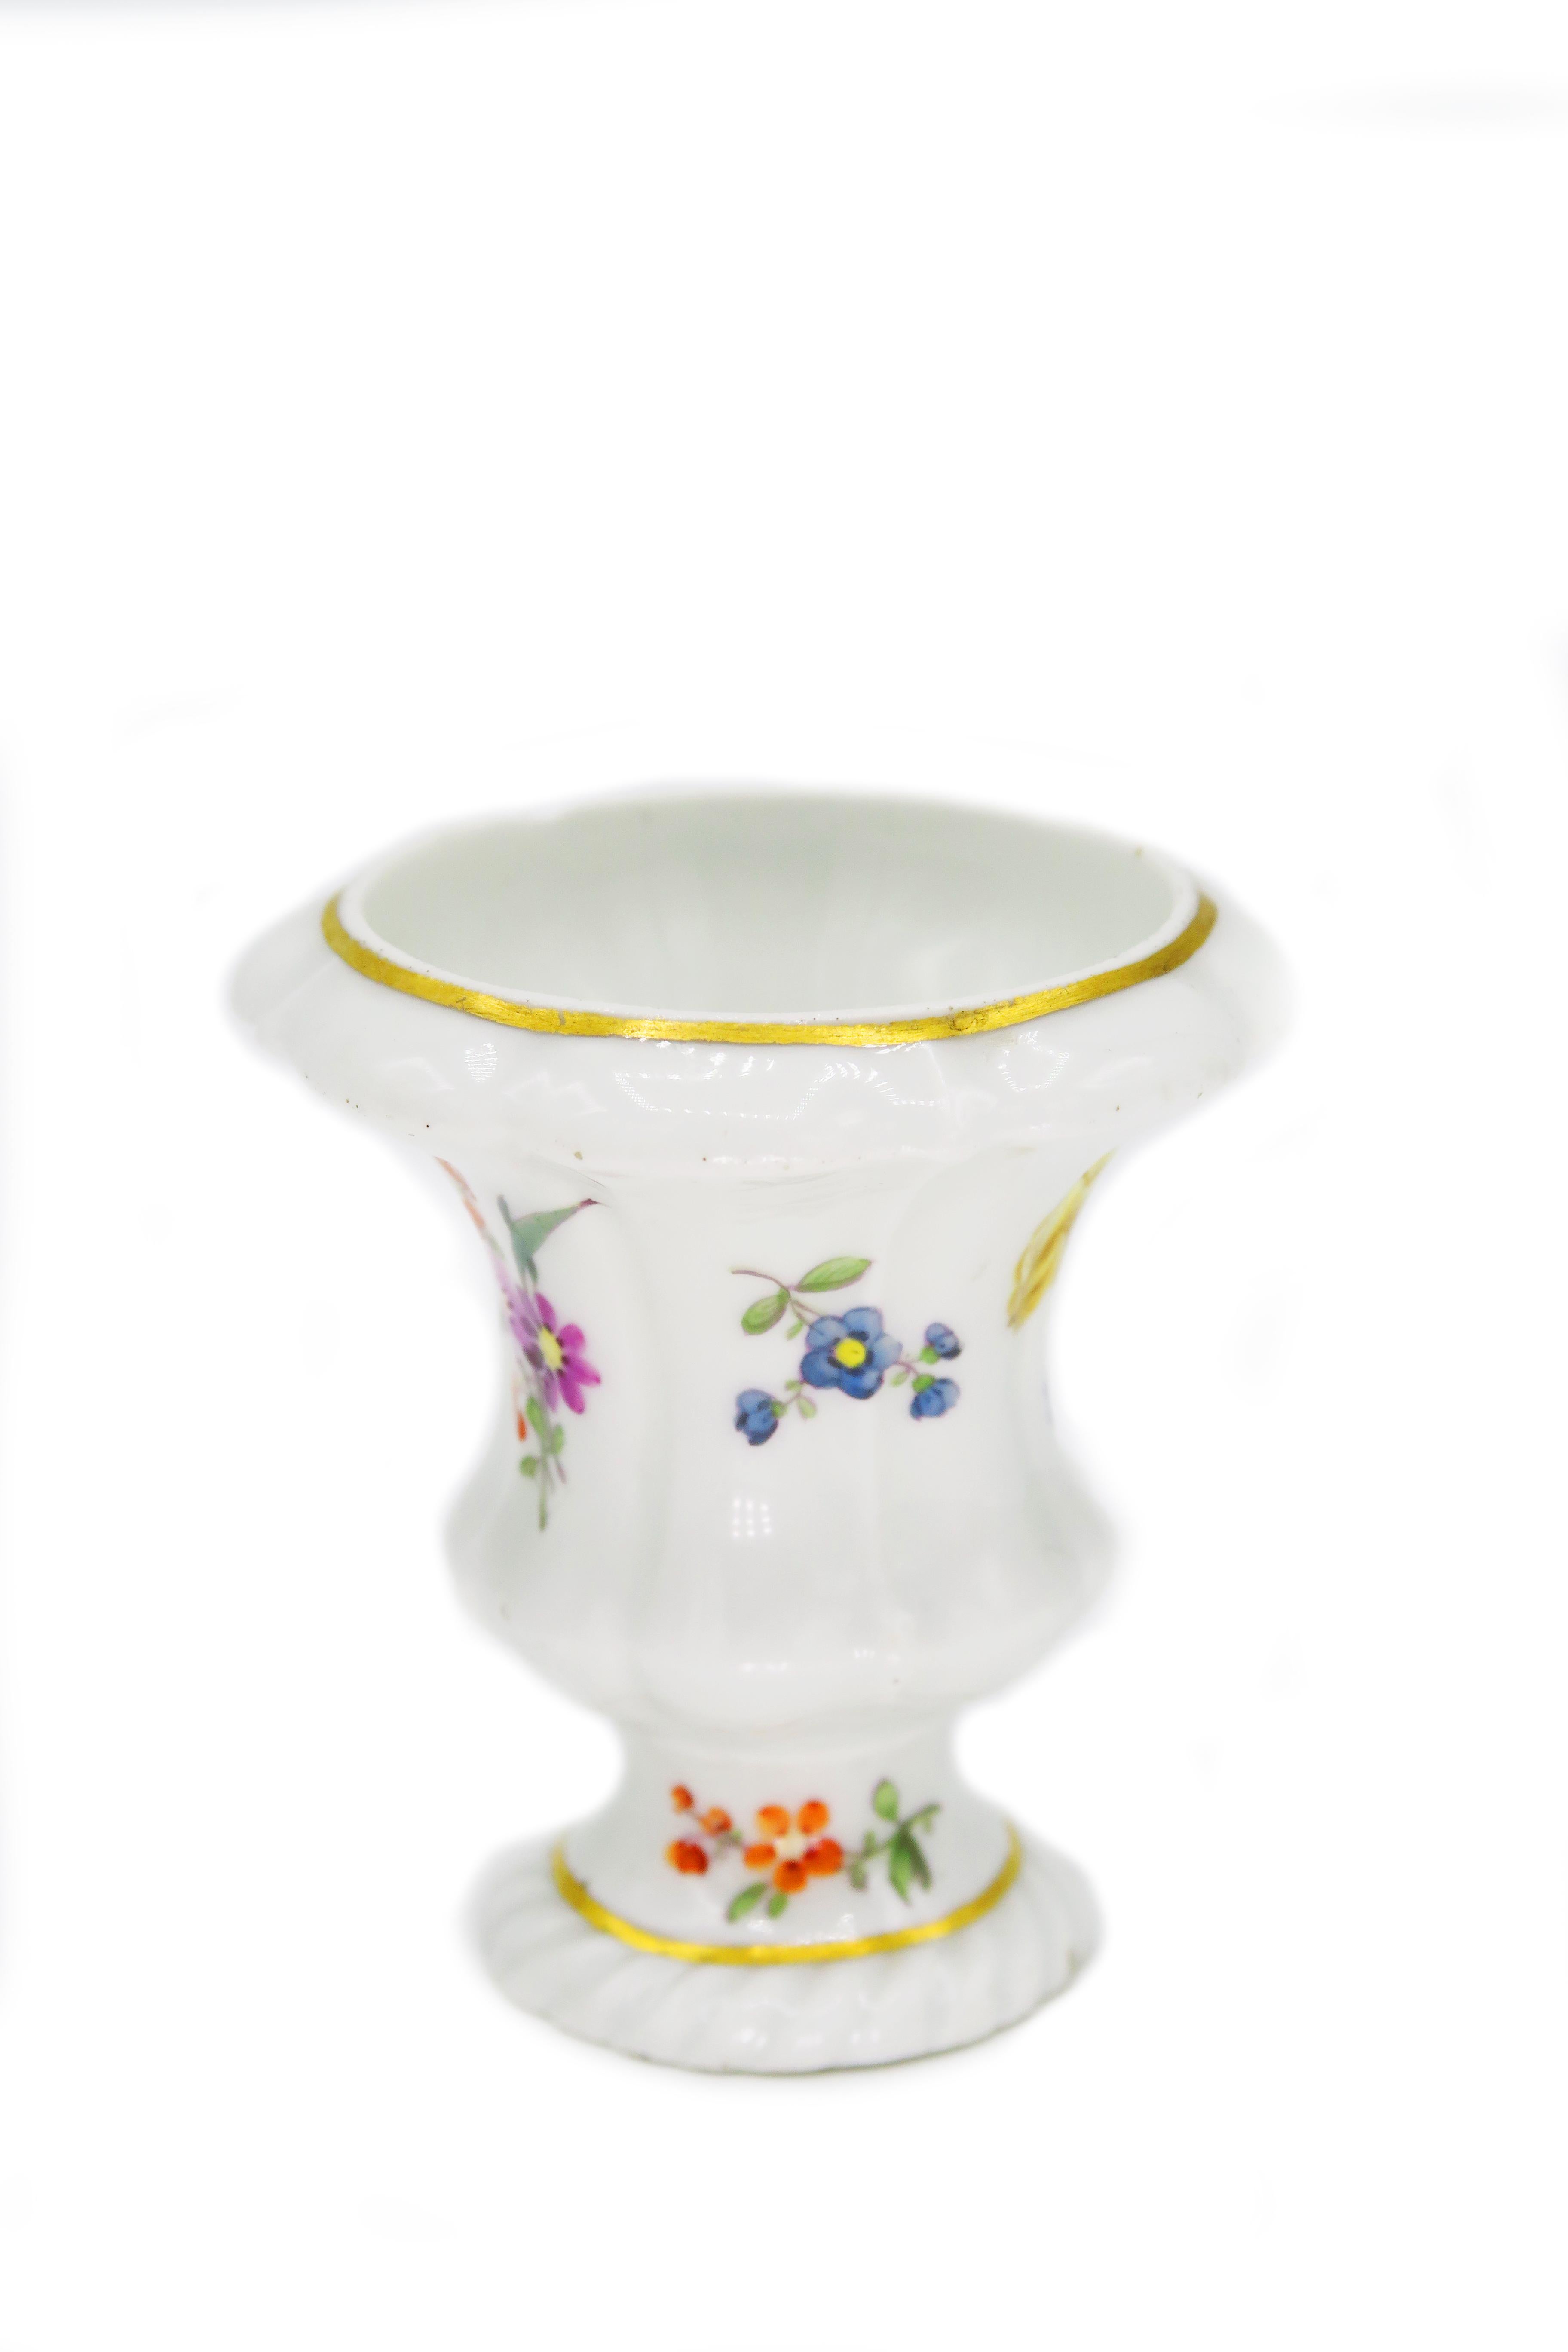 Mid-18th century Meissen model miniature vase.

Round, flared Stand, short shaft, urn-shaped body, slightly flared lip edge.
The vase depicts a natural bouquet. Gold tufted edges. Model: J. J. Kaendler

Meissen Modell Miniatur-Vase
Runder,